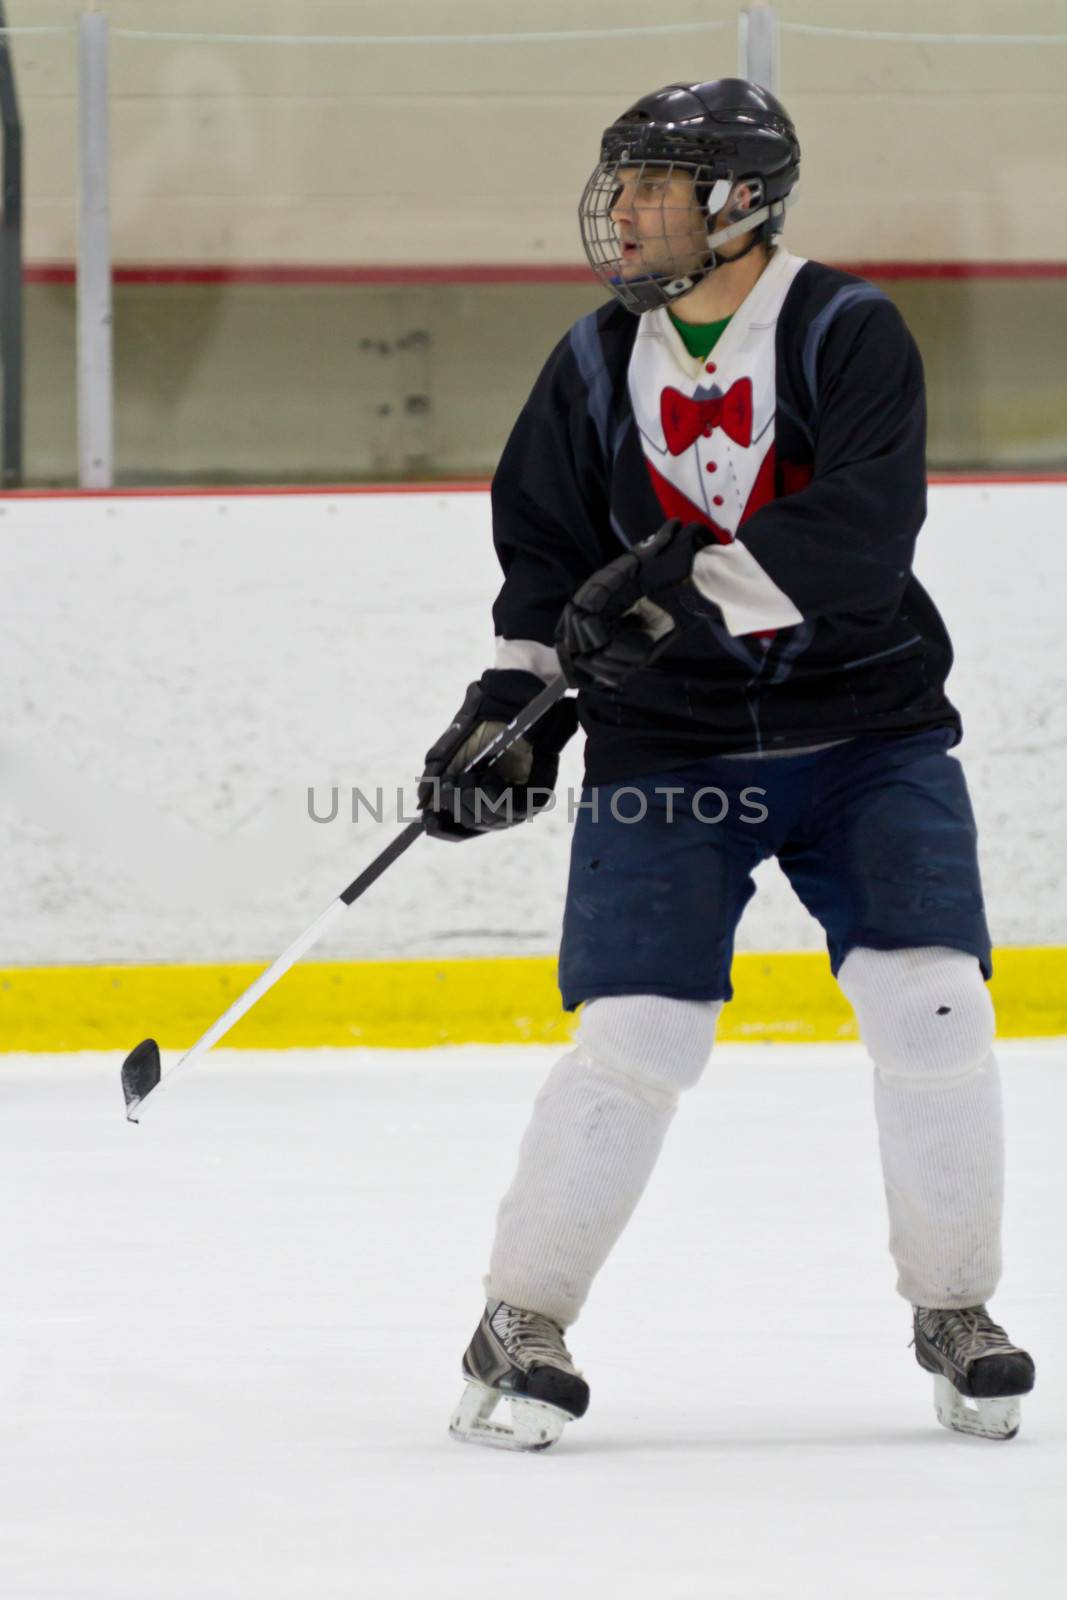 Recreational ice hockey player